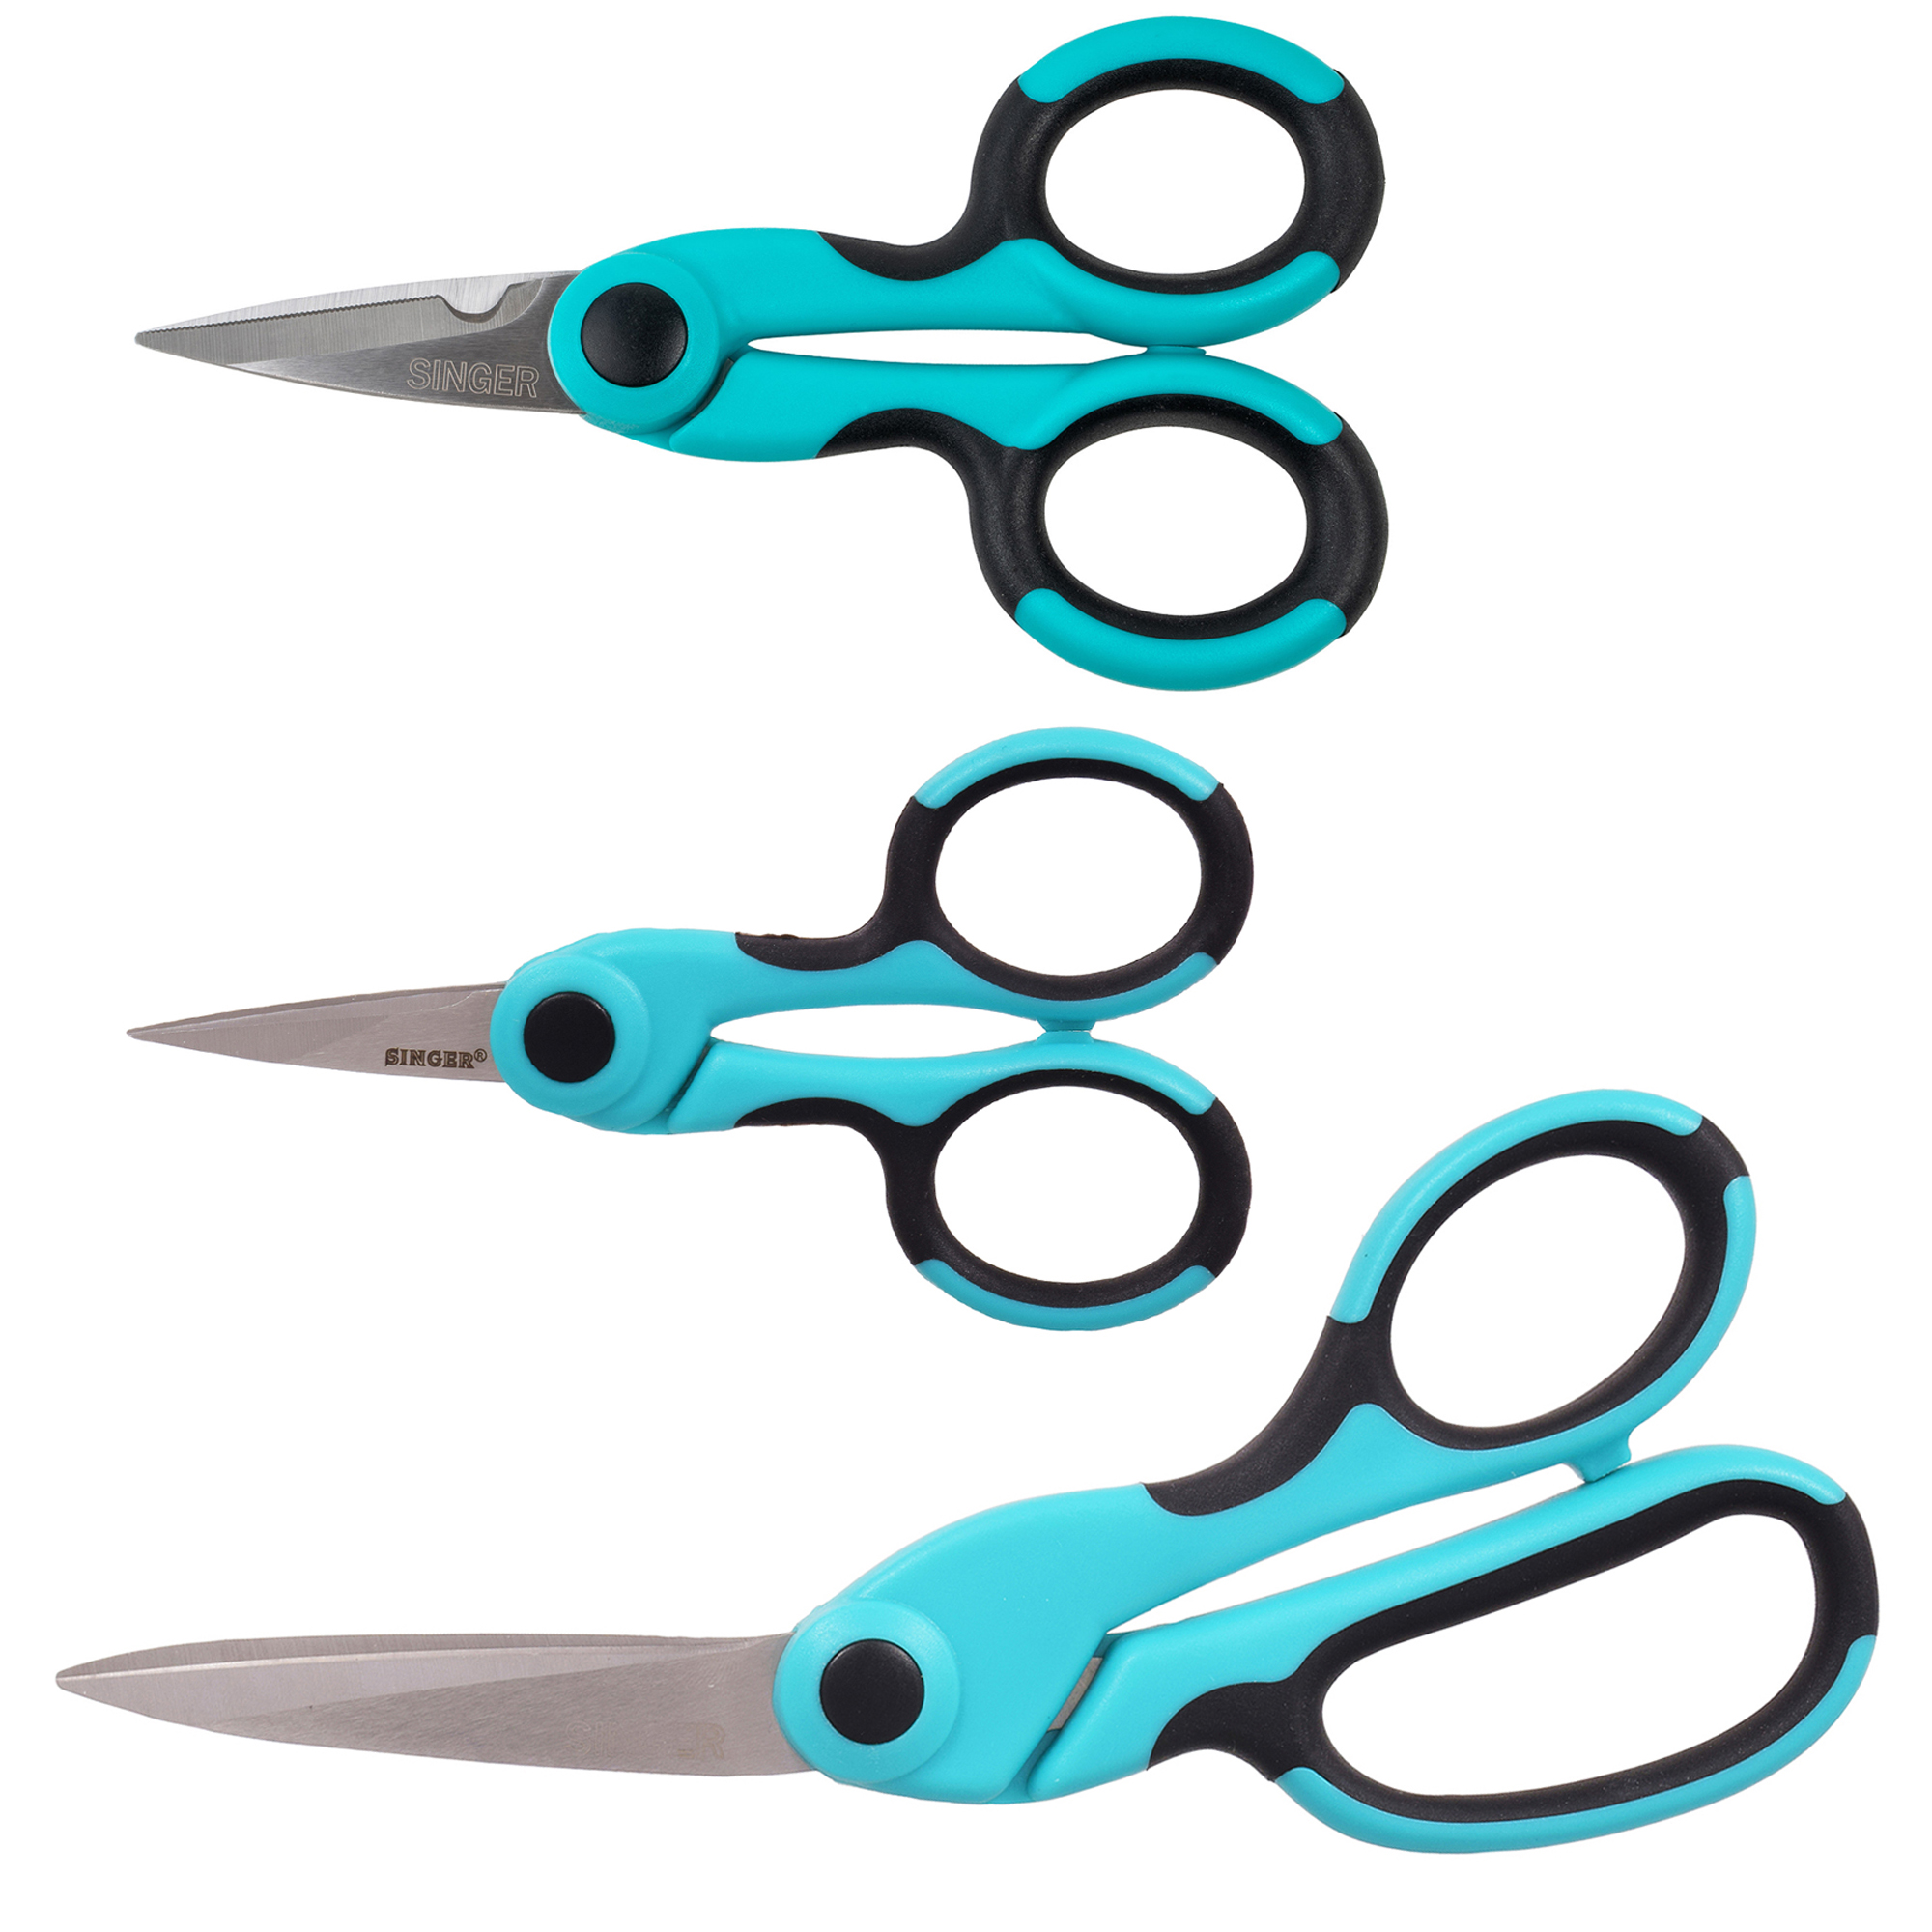 SINGER ProSeries Scissor Set, Heavy Duty Bent 8 1/2" Fabric Scissors, All Purpose 5 1/2" Craft Scissors, 4 1/2" Detail Scissors, Teal, Pack of 3 - image 19 of 19